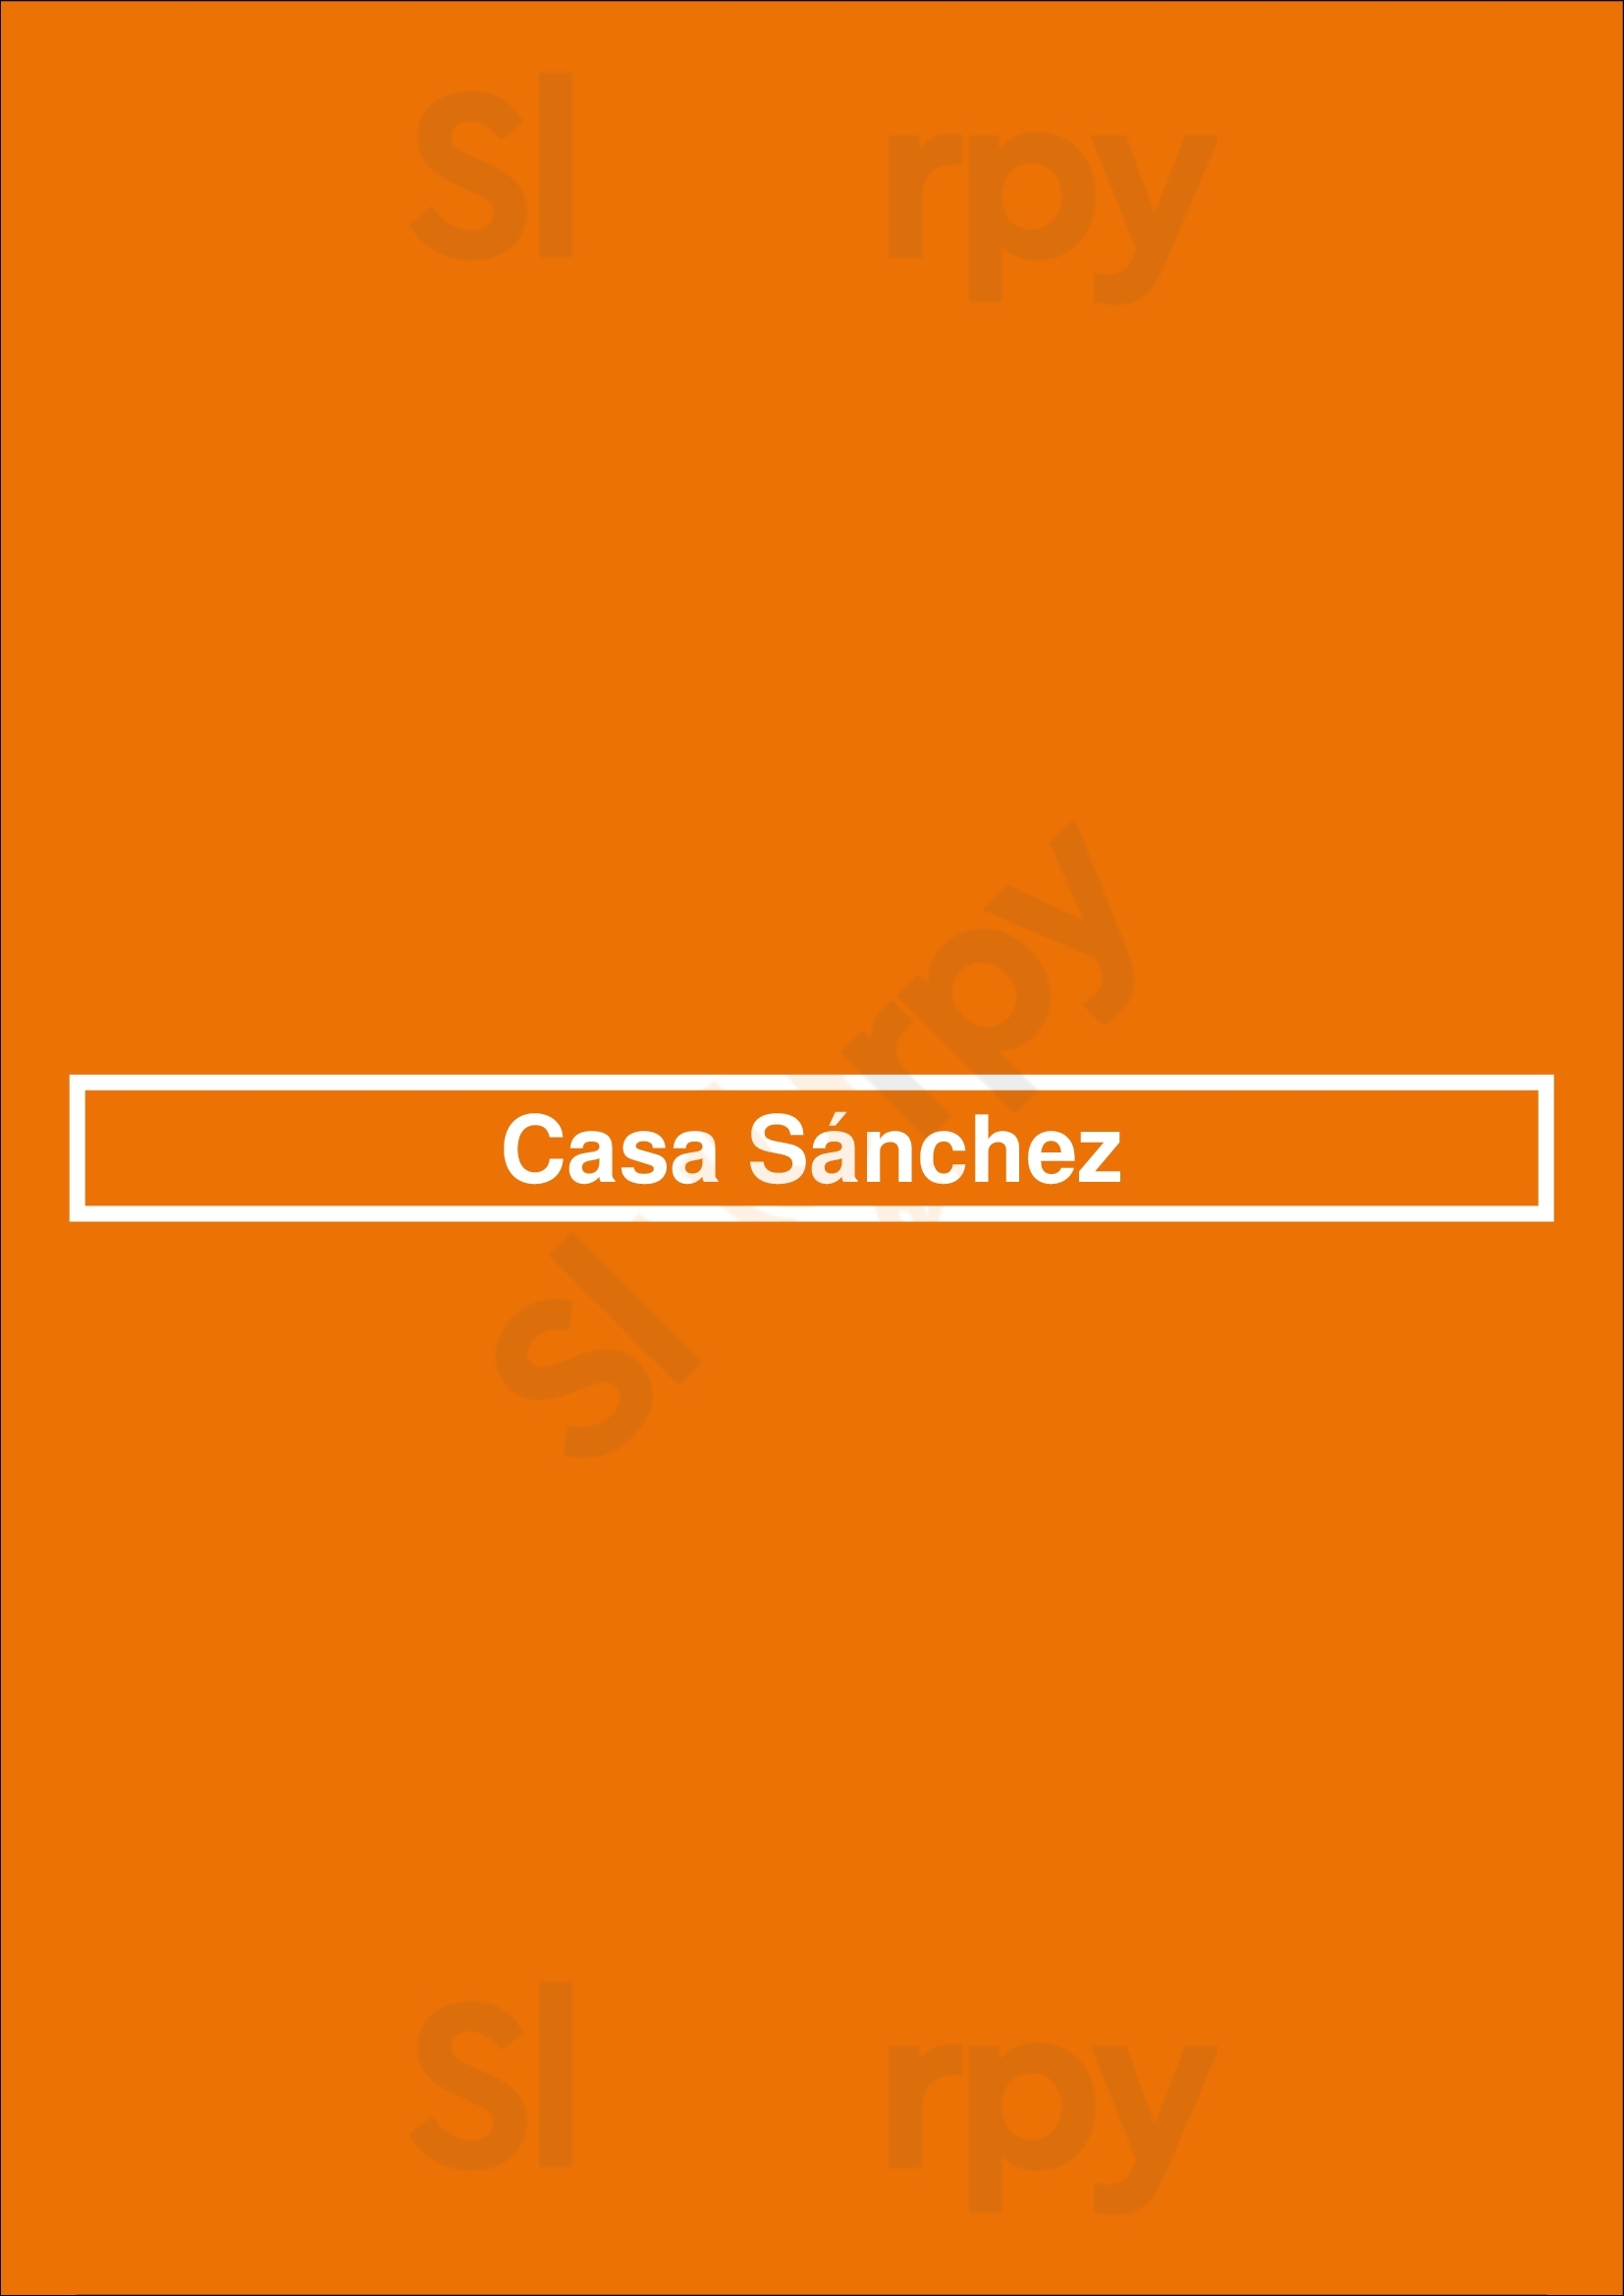 Casa Sánchez Barcelona Menu - 1